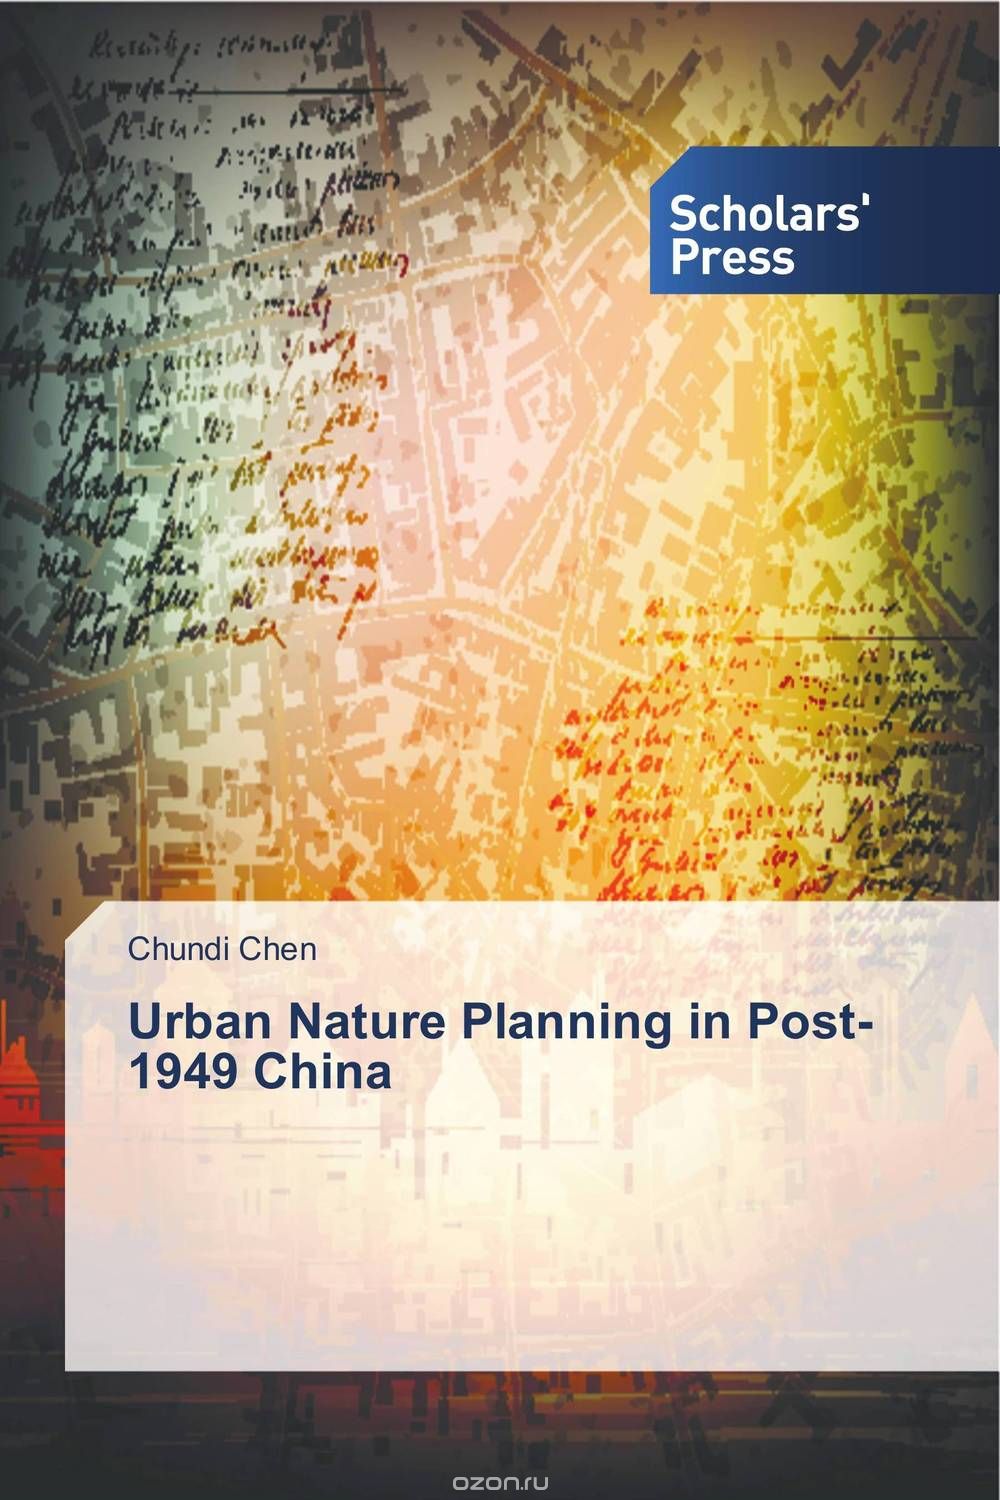 Скачать книгу "Urban Nature Planning in Post-1949 China"